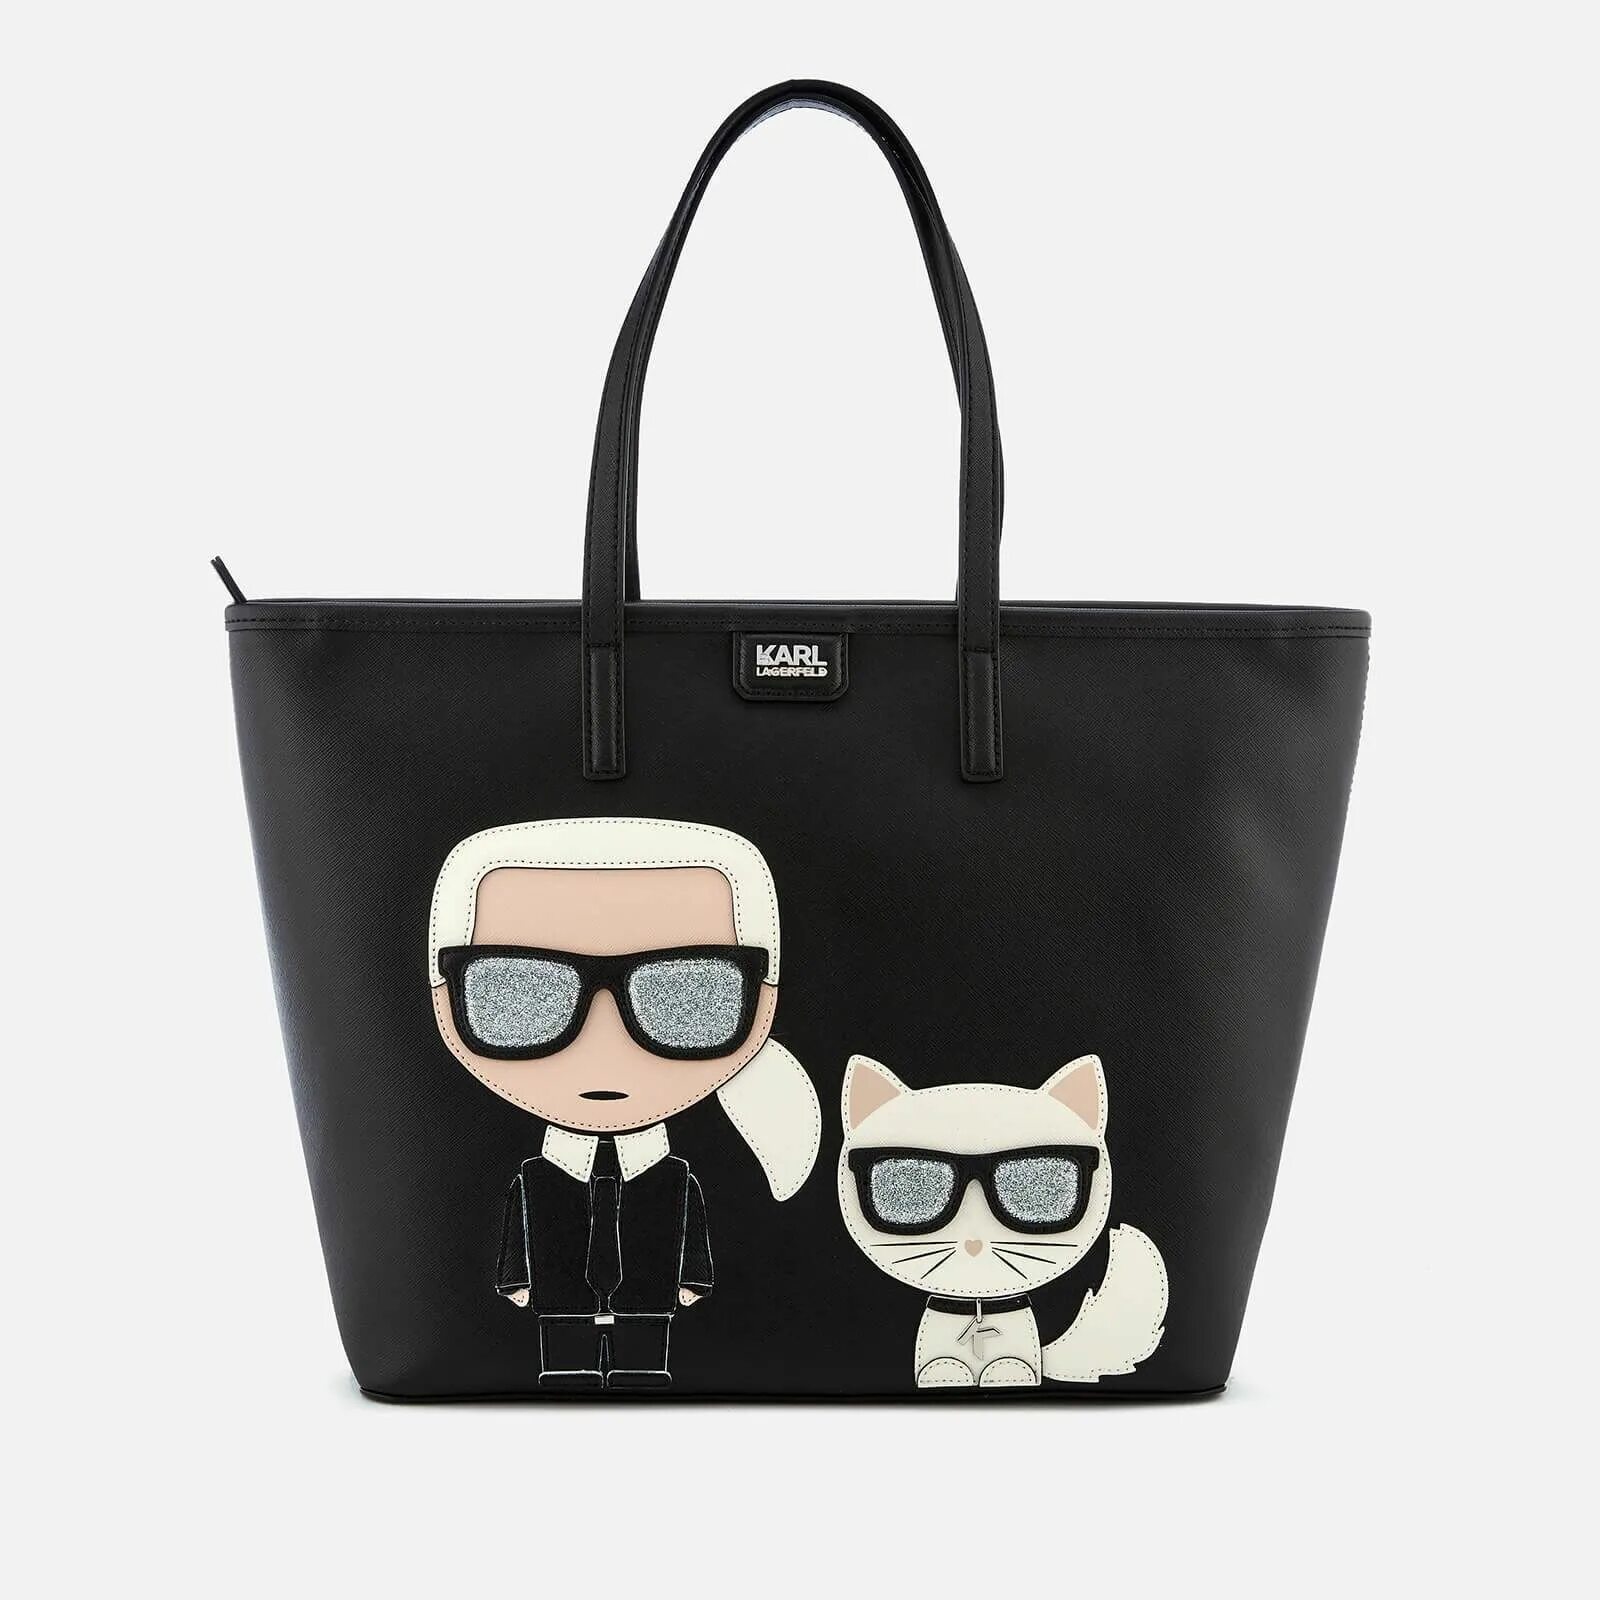 Купить сумку лагерфельд оригинал. Сумка Karl Lagerfeld ikonik. Сумка Karl Lagerfeld ikonik черная.